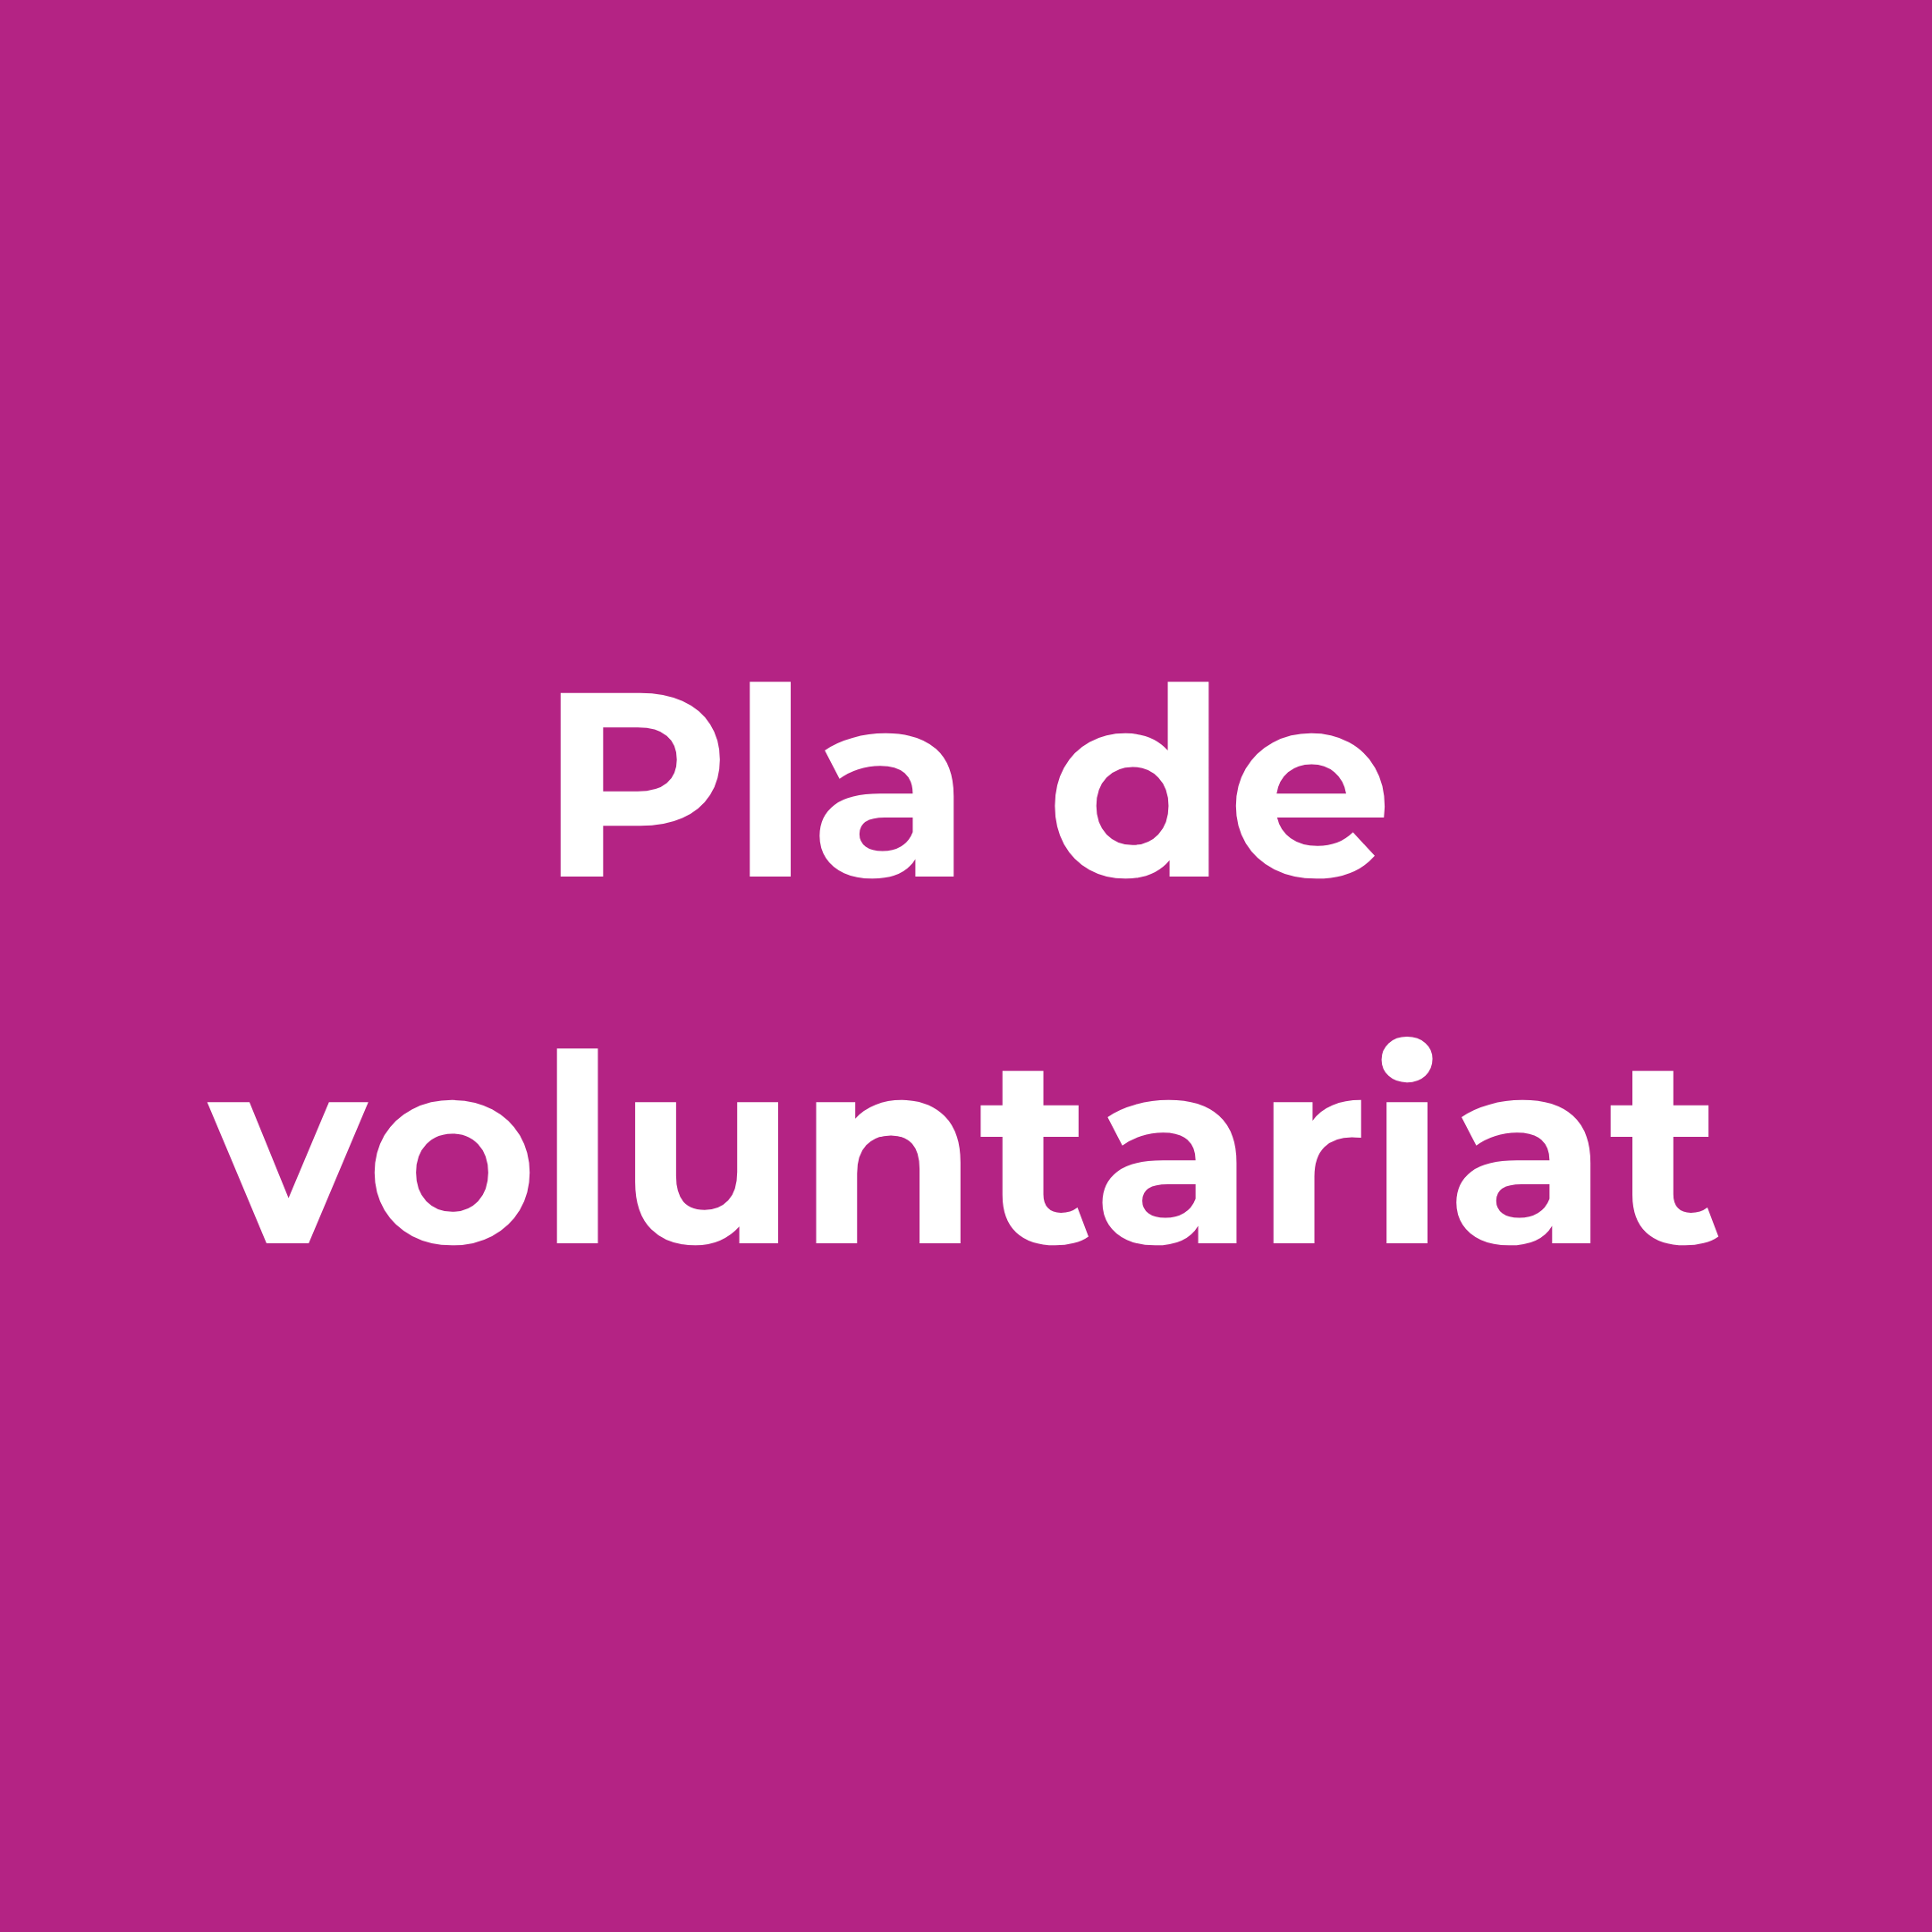 Pla de voluntariat